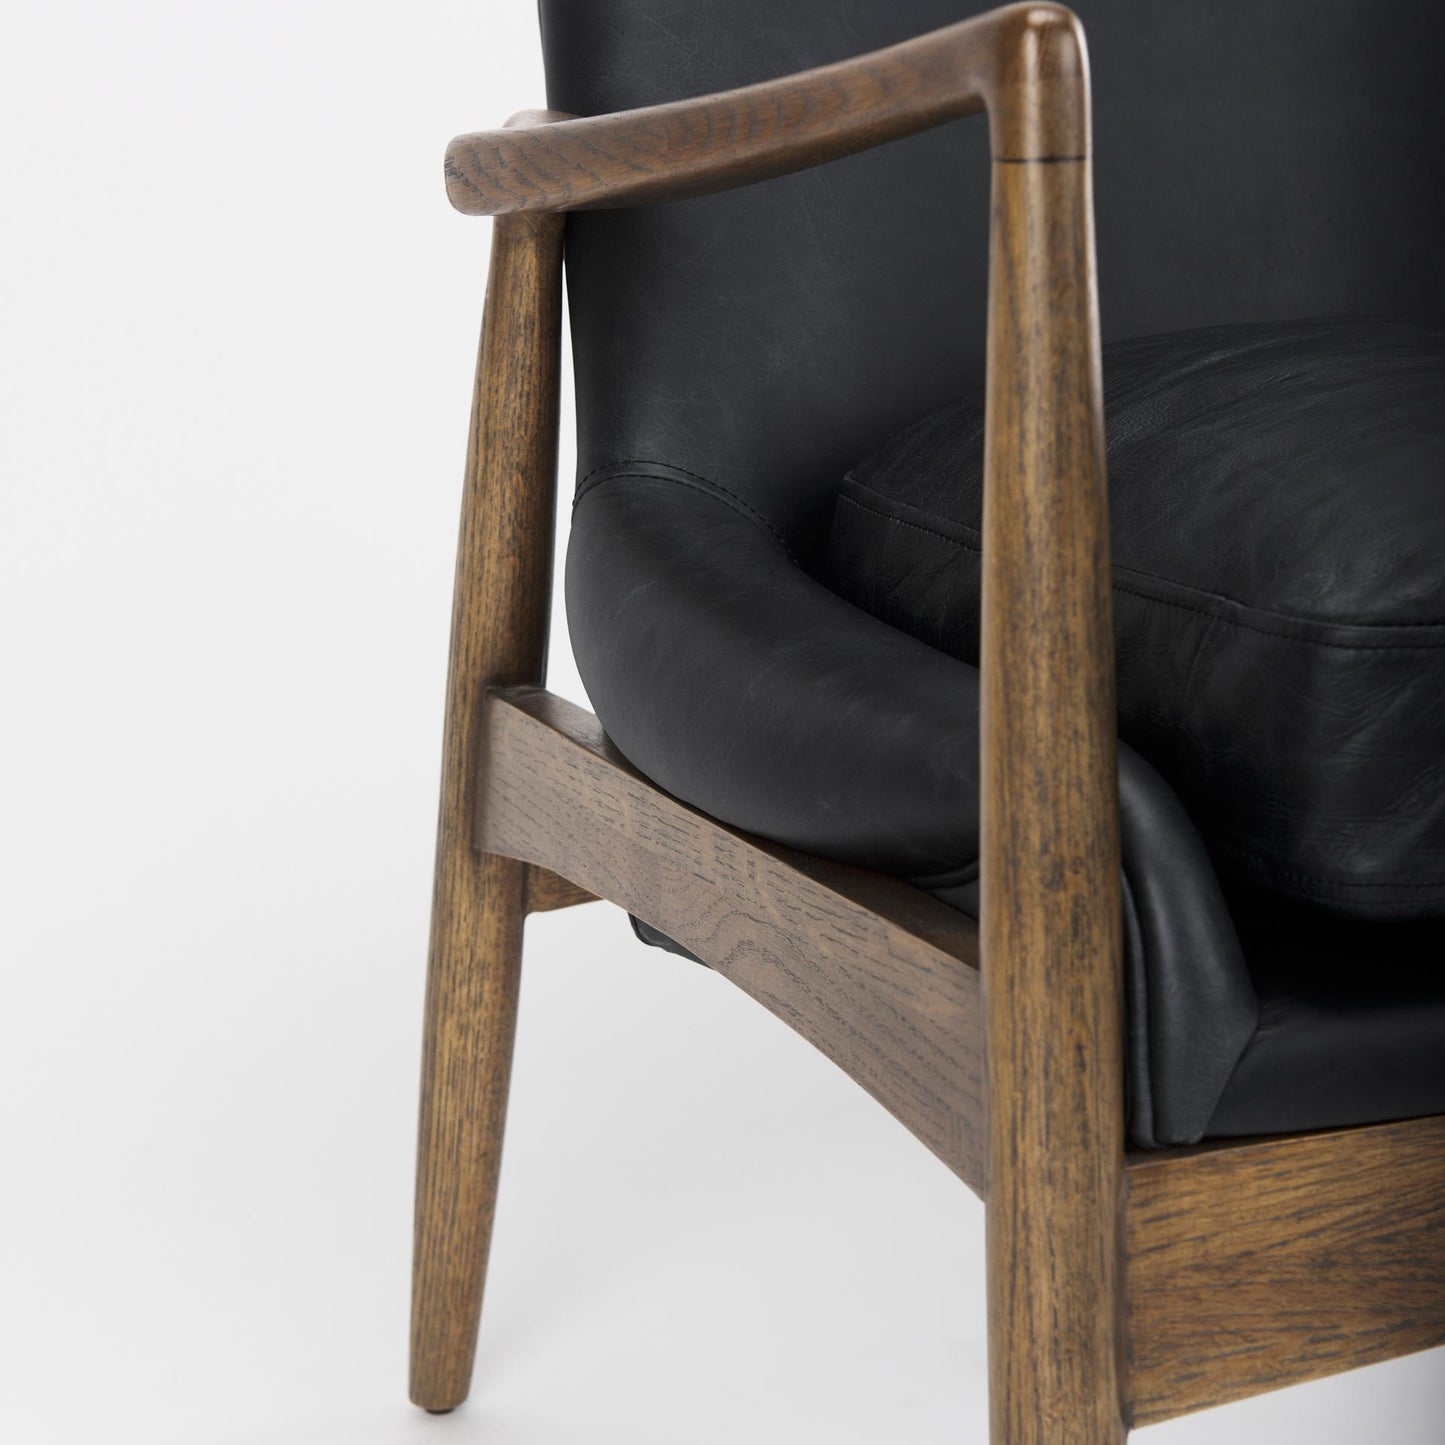 Westan Black Genuine Leather W/Medium Brown Wood Accent Chair